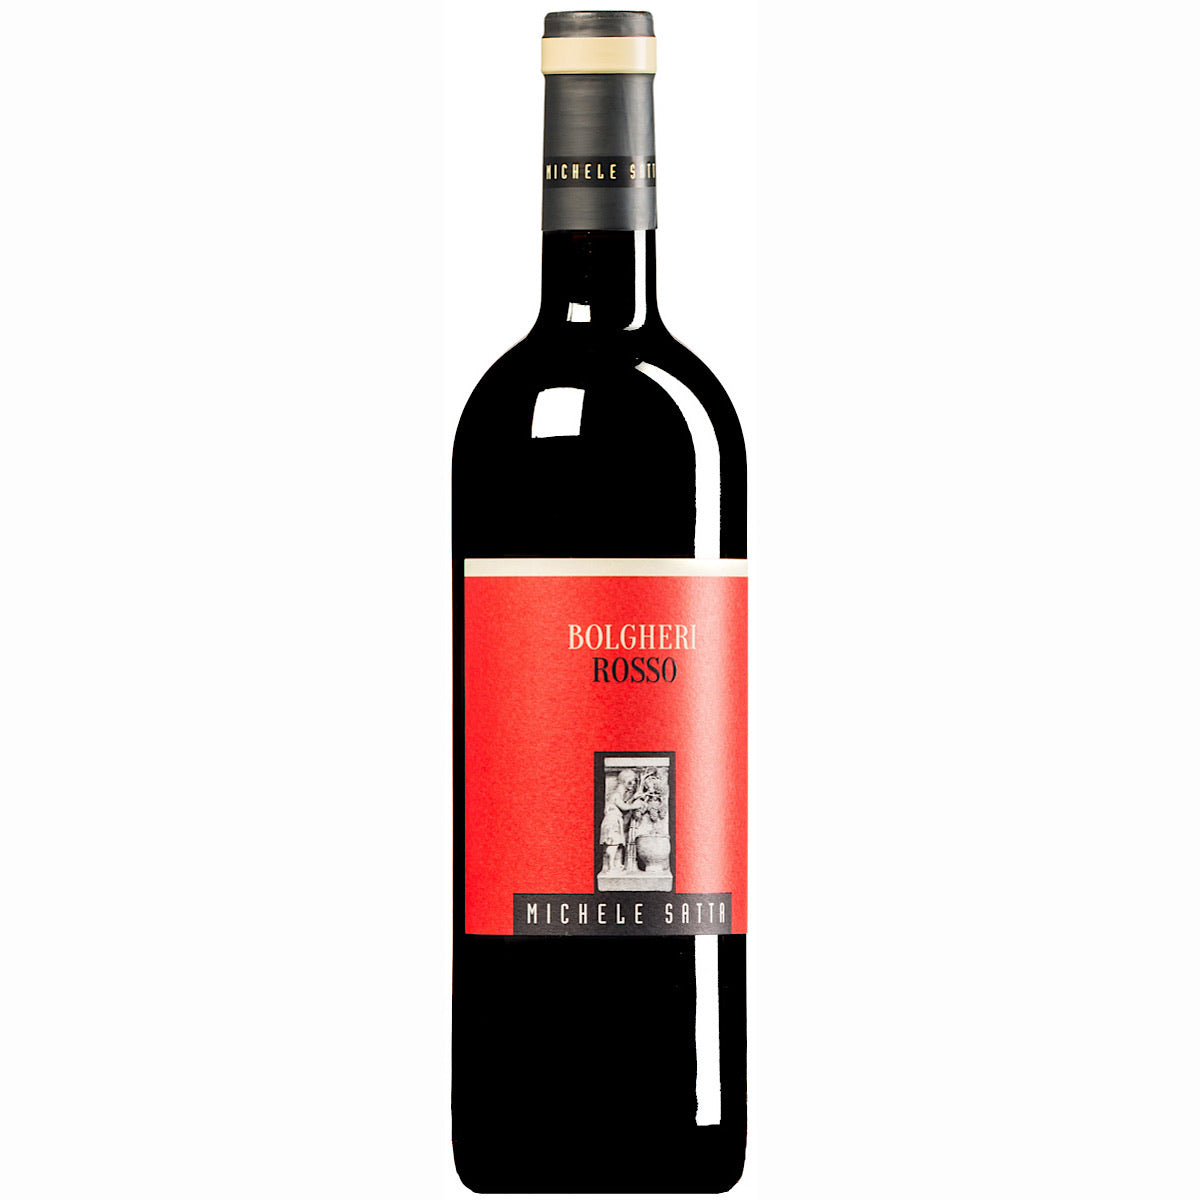 Michele Satta’s Bolgheri Rosso 6 Bottle Case 75cl